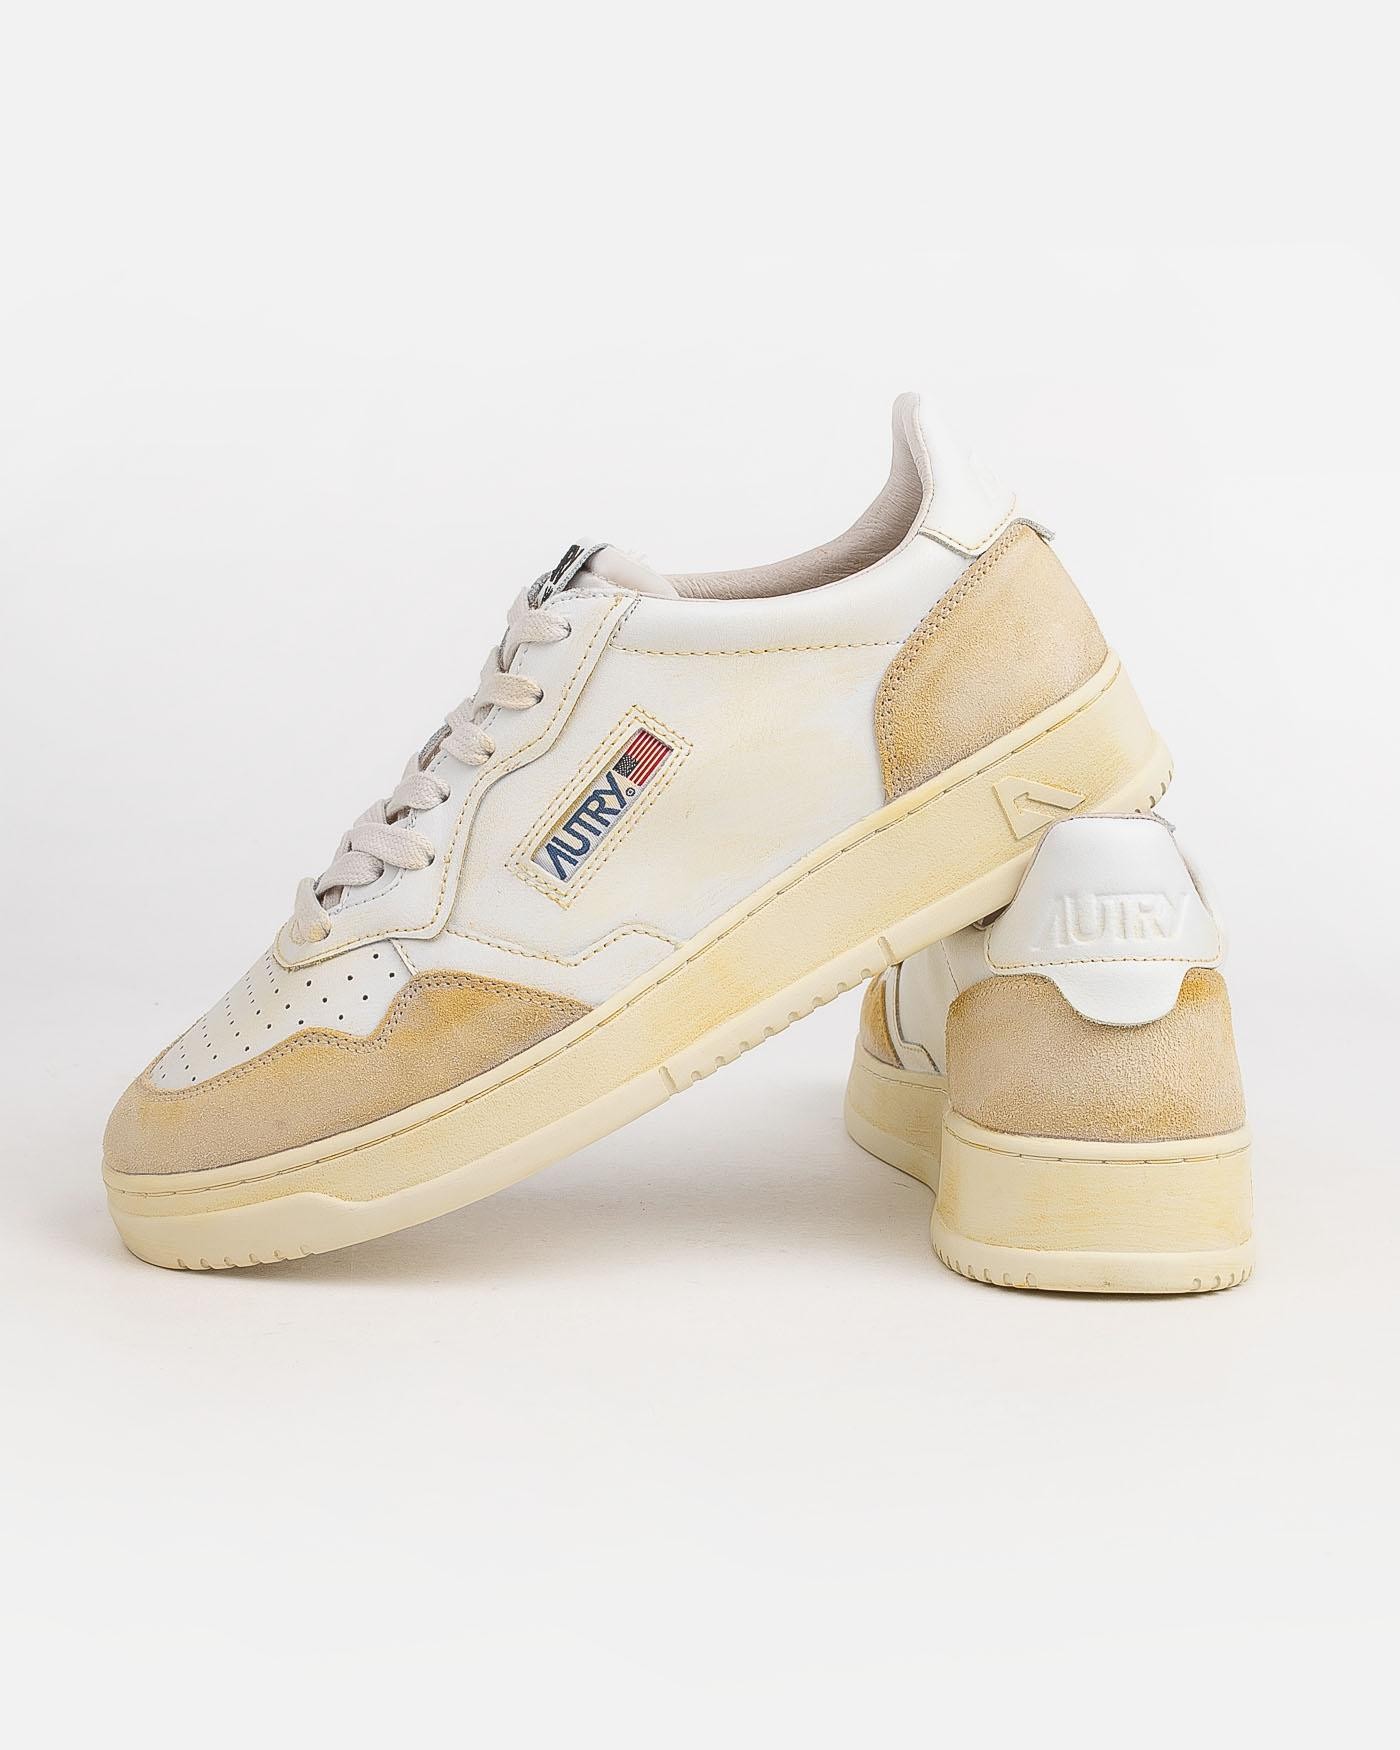 autry-zapatillas-avlm-yl01-sneakers-white-blancas-5